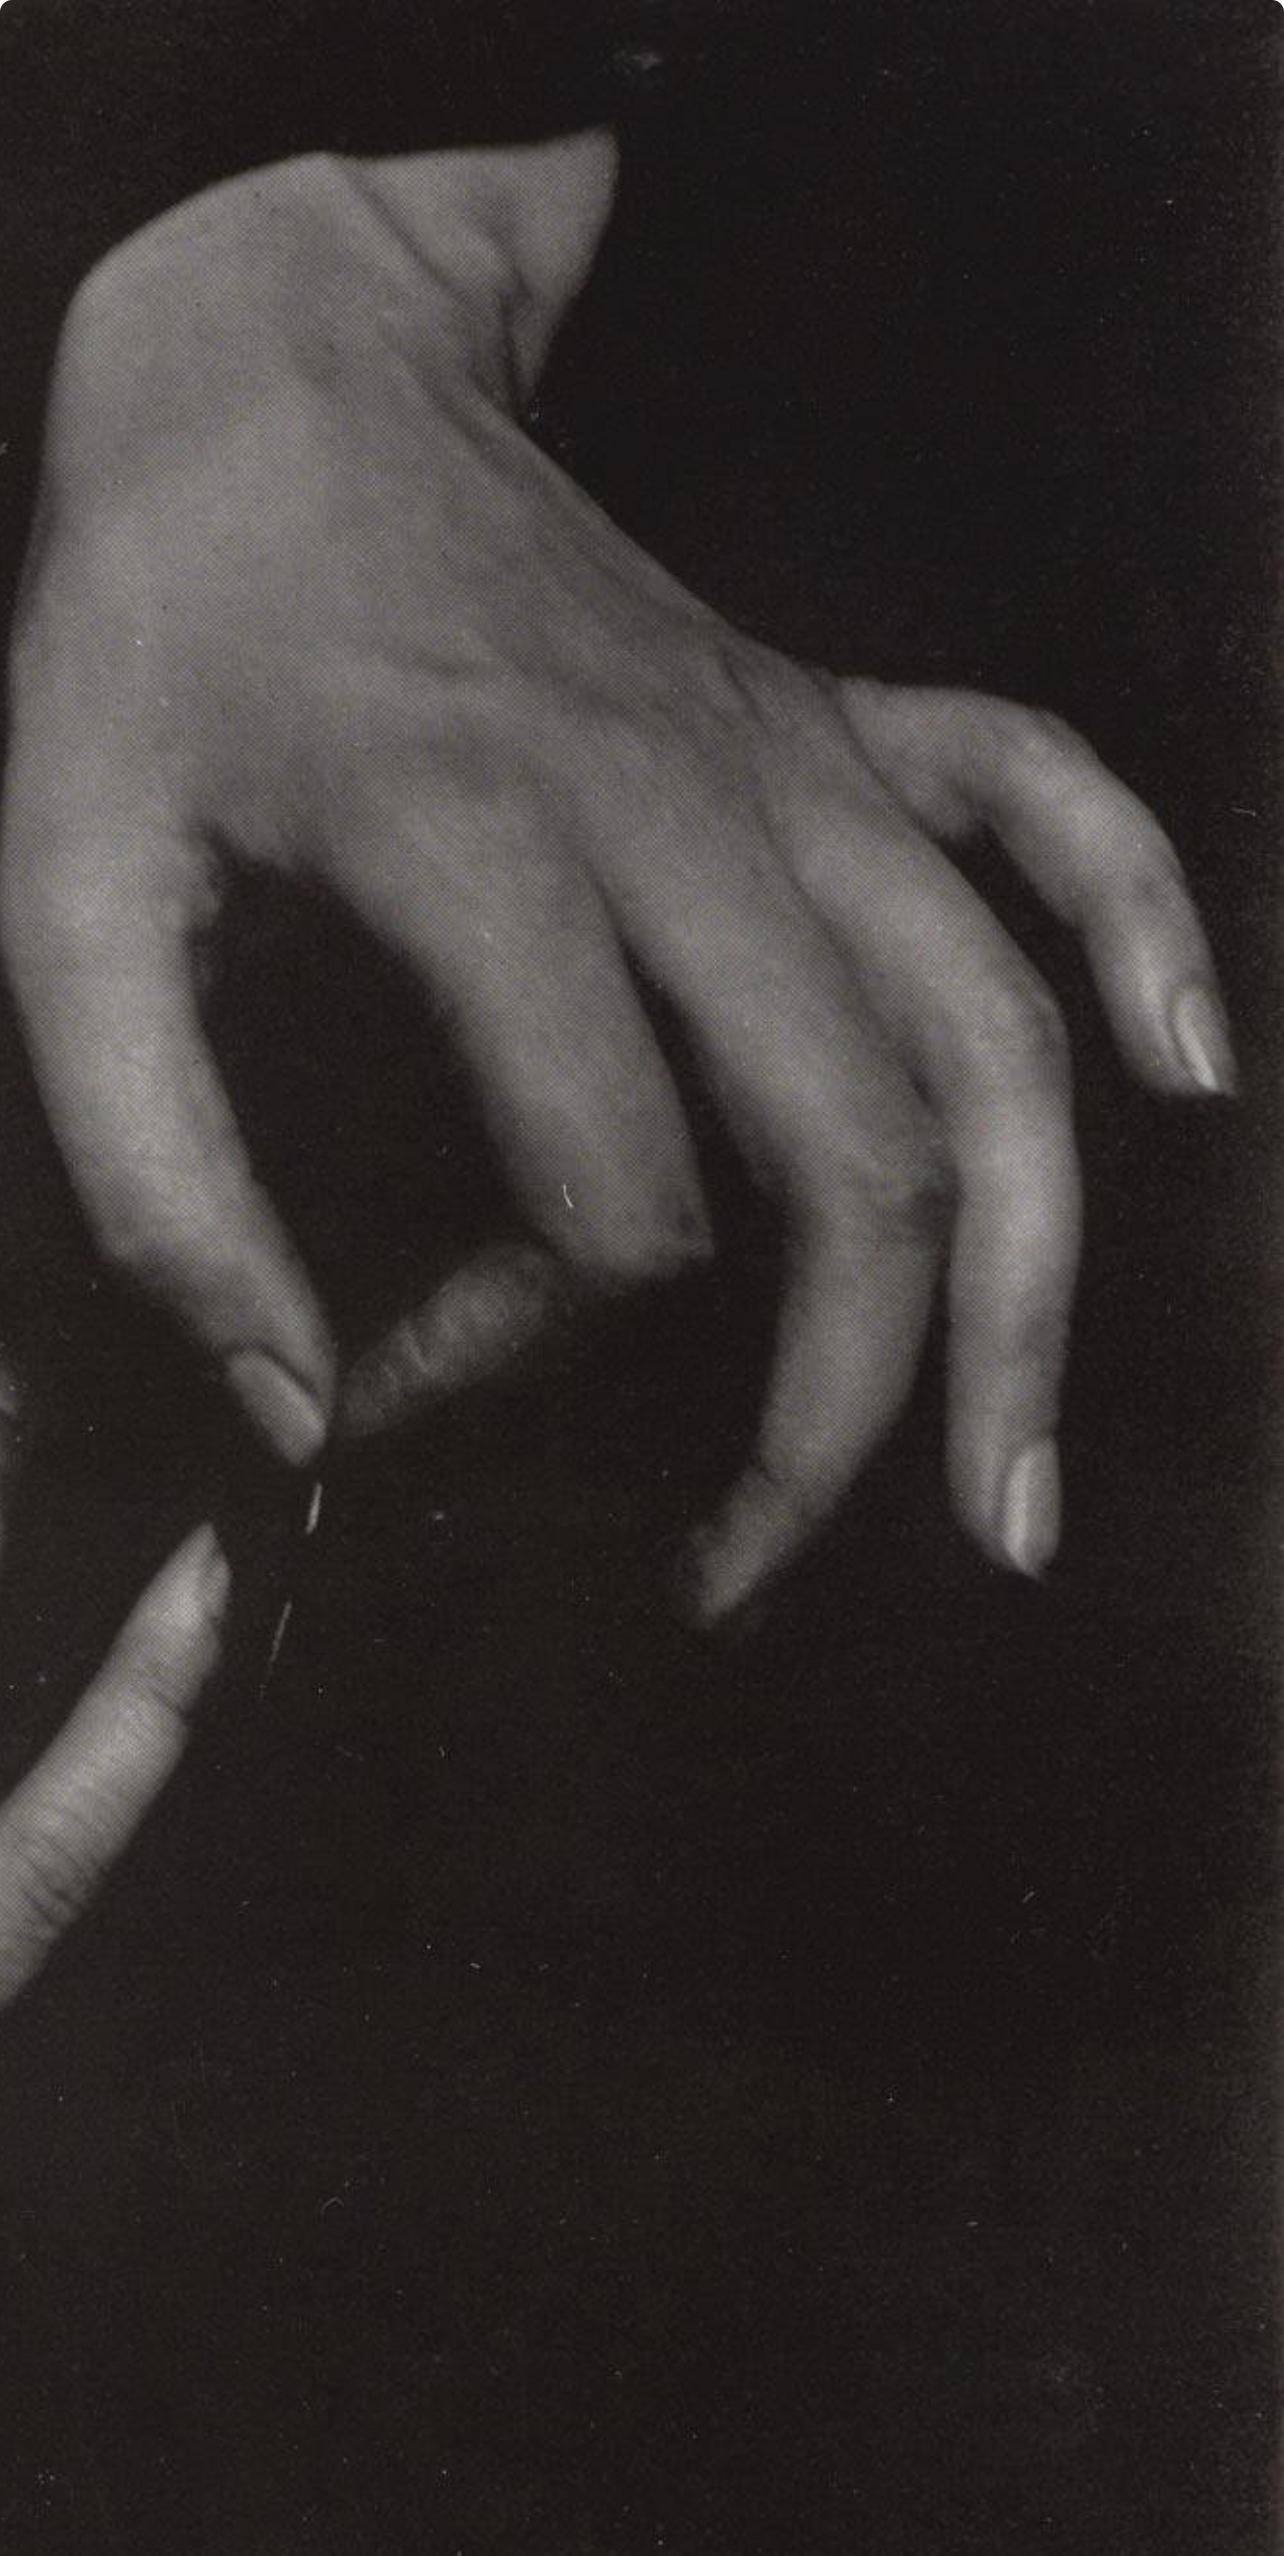 Stieglitz, O'Keeffe Hands w/Thimble, Alfred Stieglitz Memorial Portfolio (after) For Sale 2